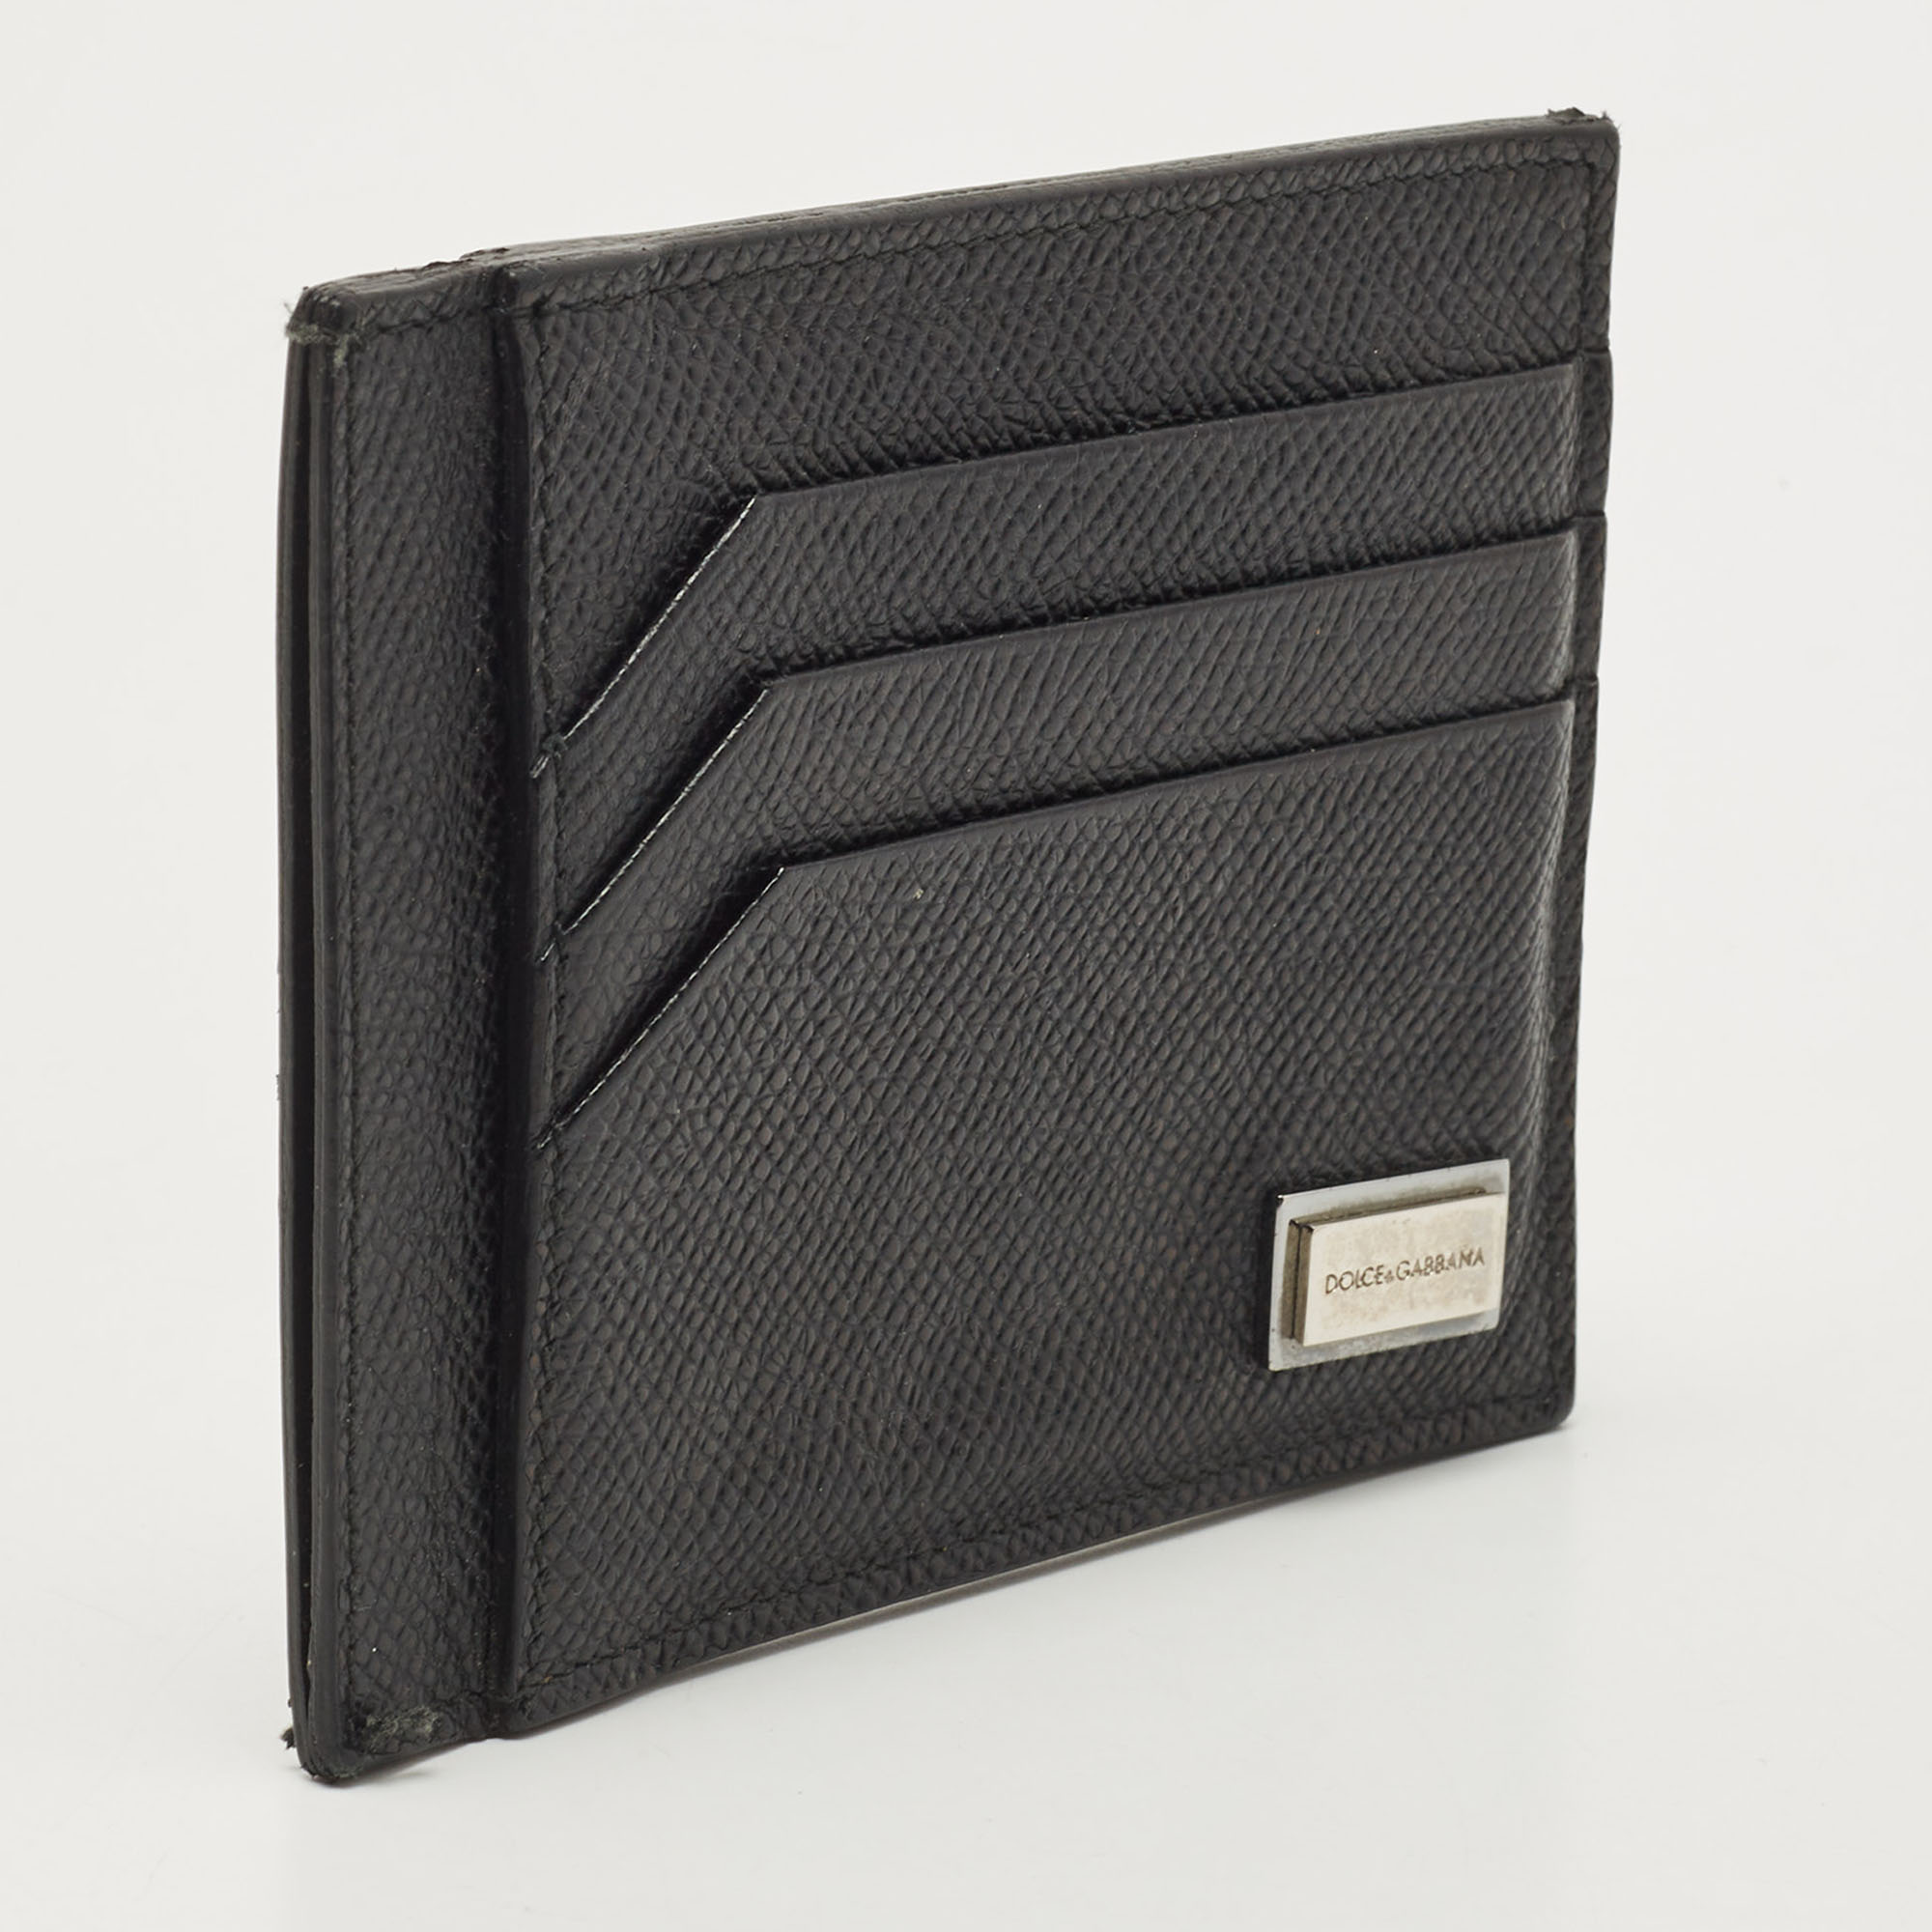 Dolce And Gabbana Black Leather 6CC Card Holder